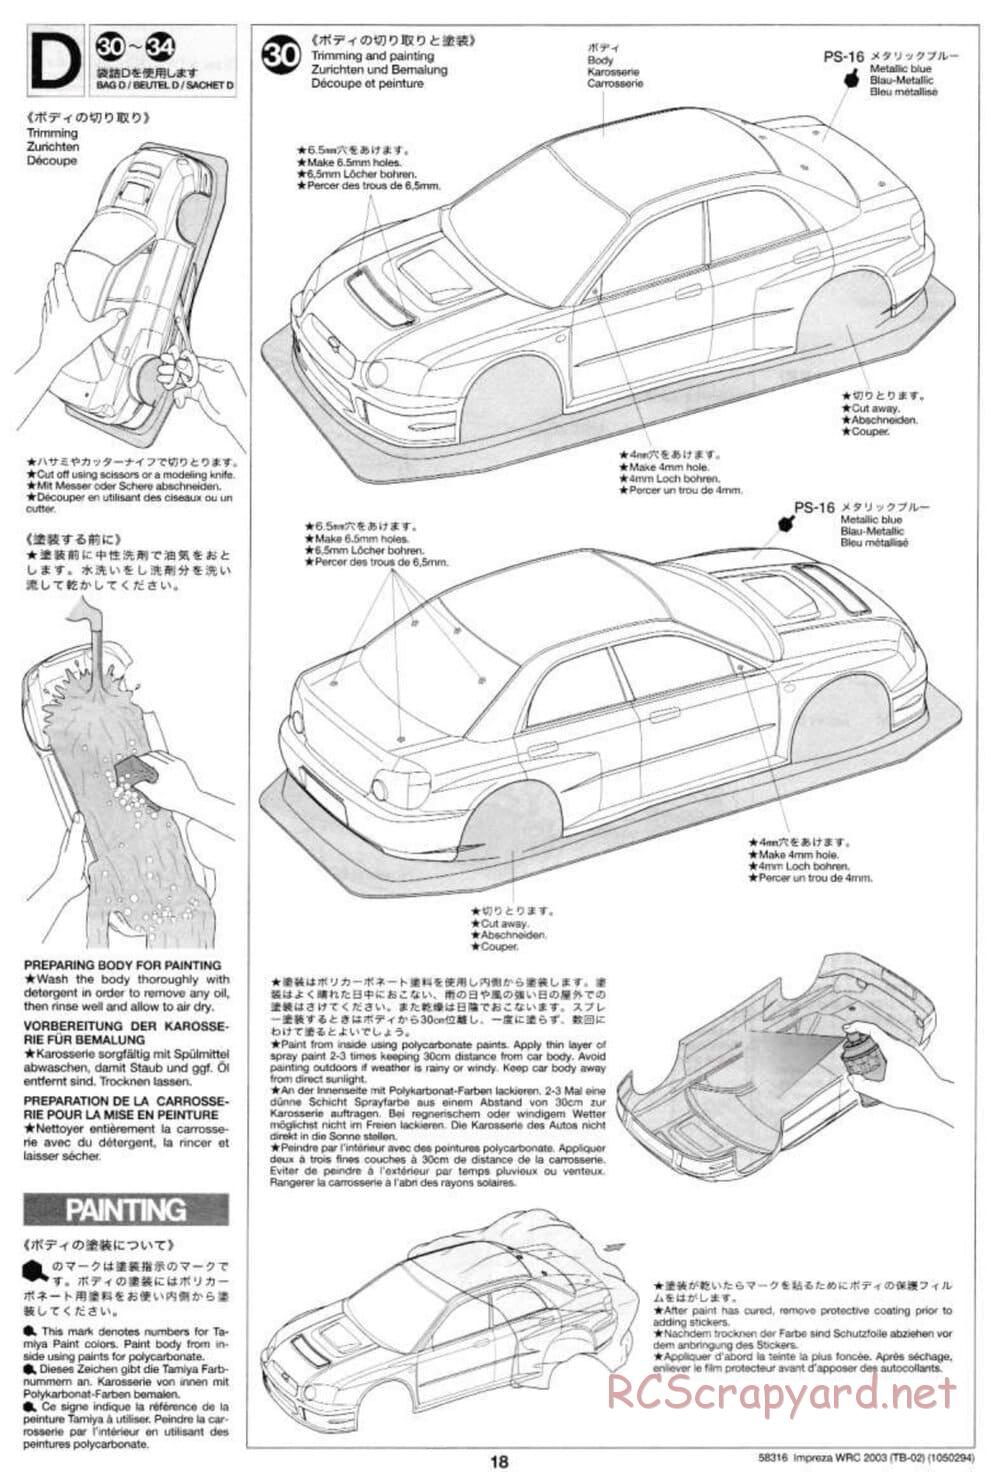 Tamiya - Subaru Impreza WRC 2003 - TB-02 Chassis - Manual - Page 18